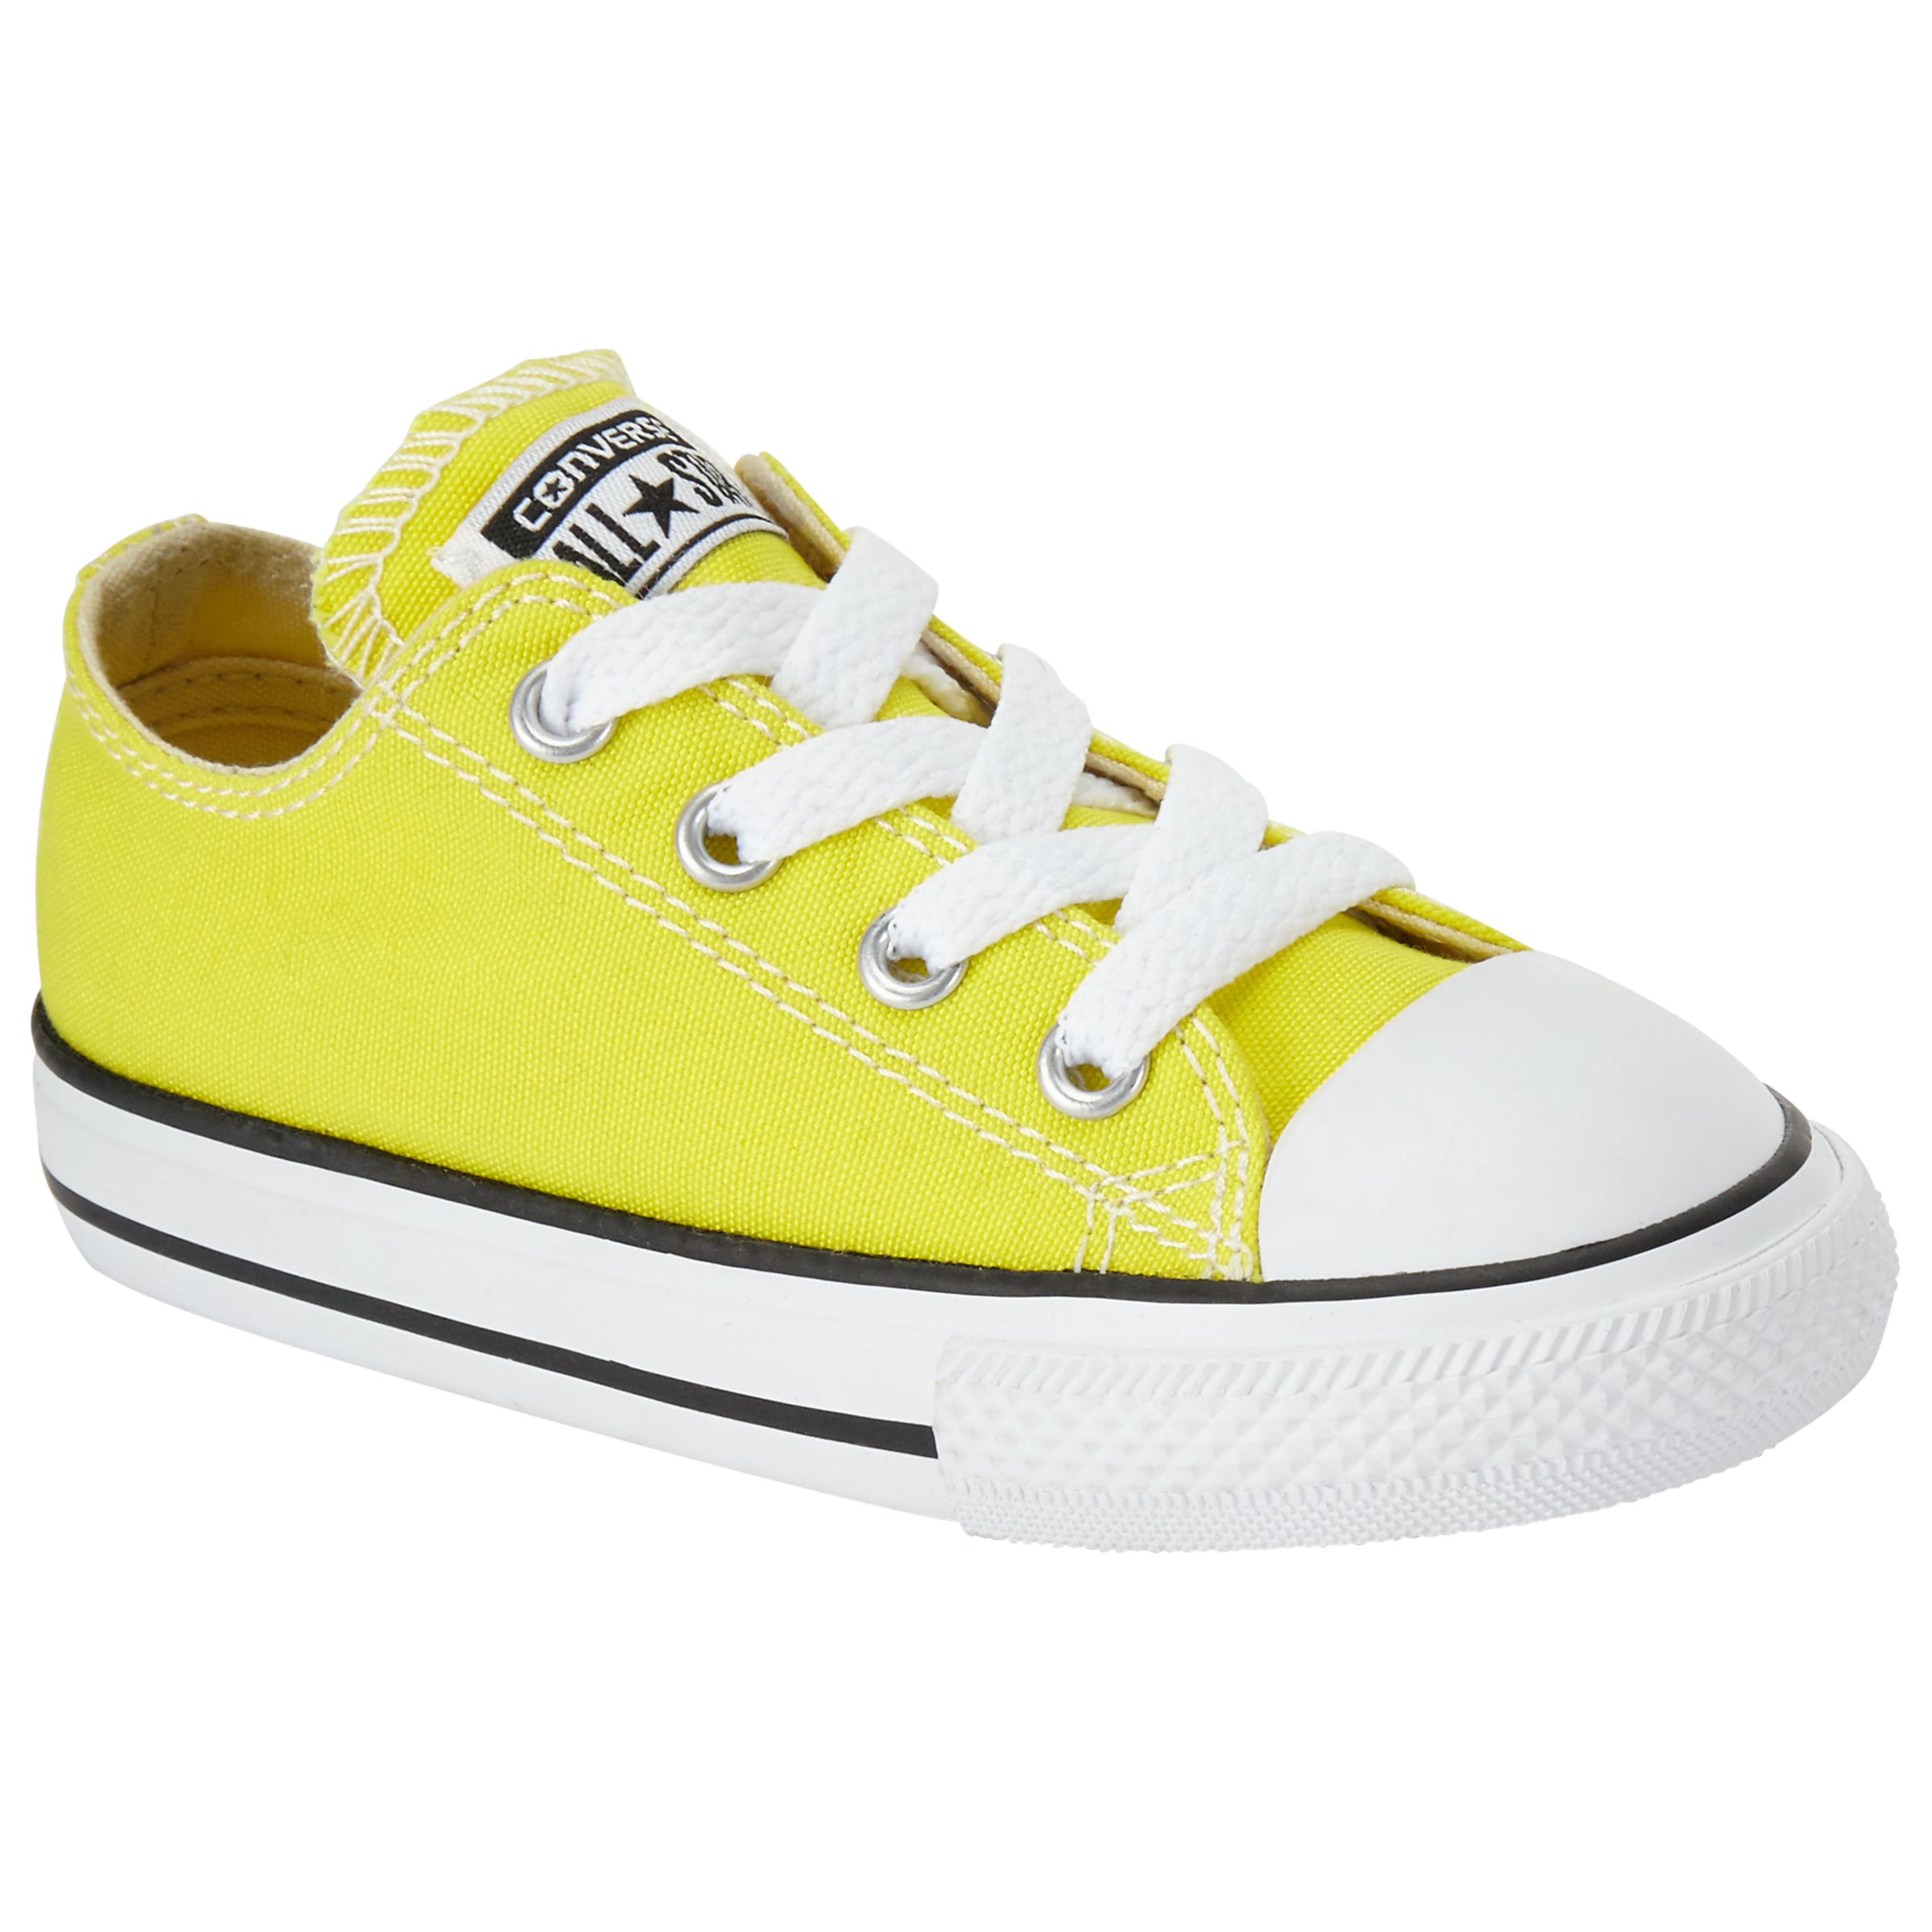 childrens yellow converse